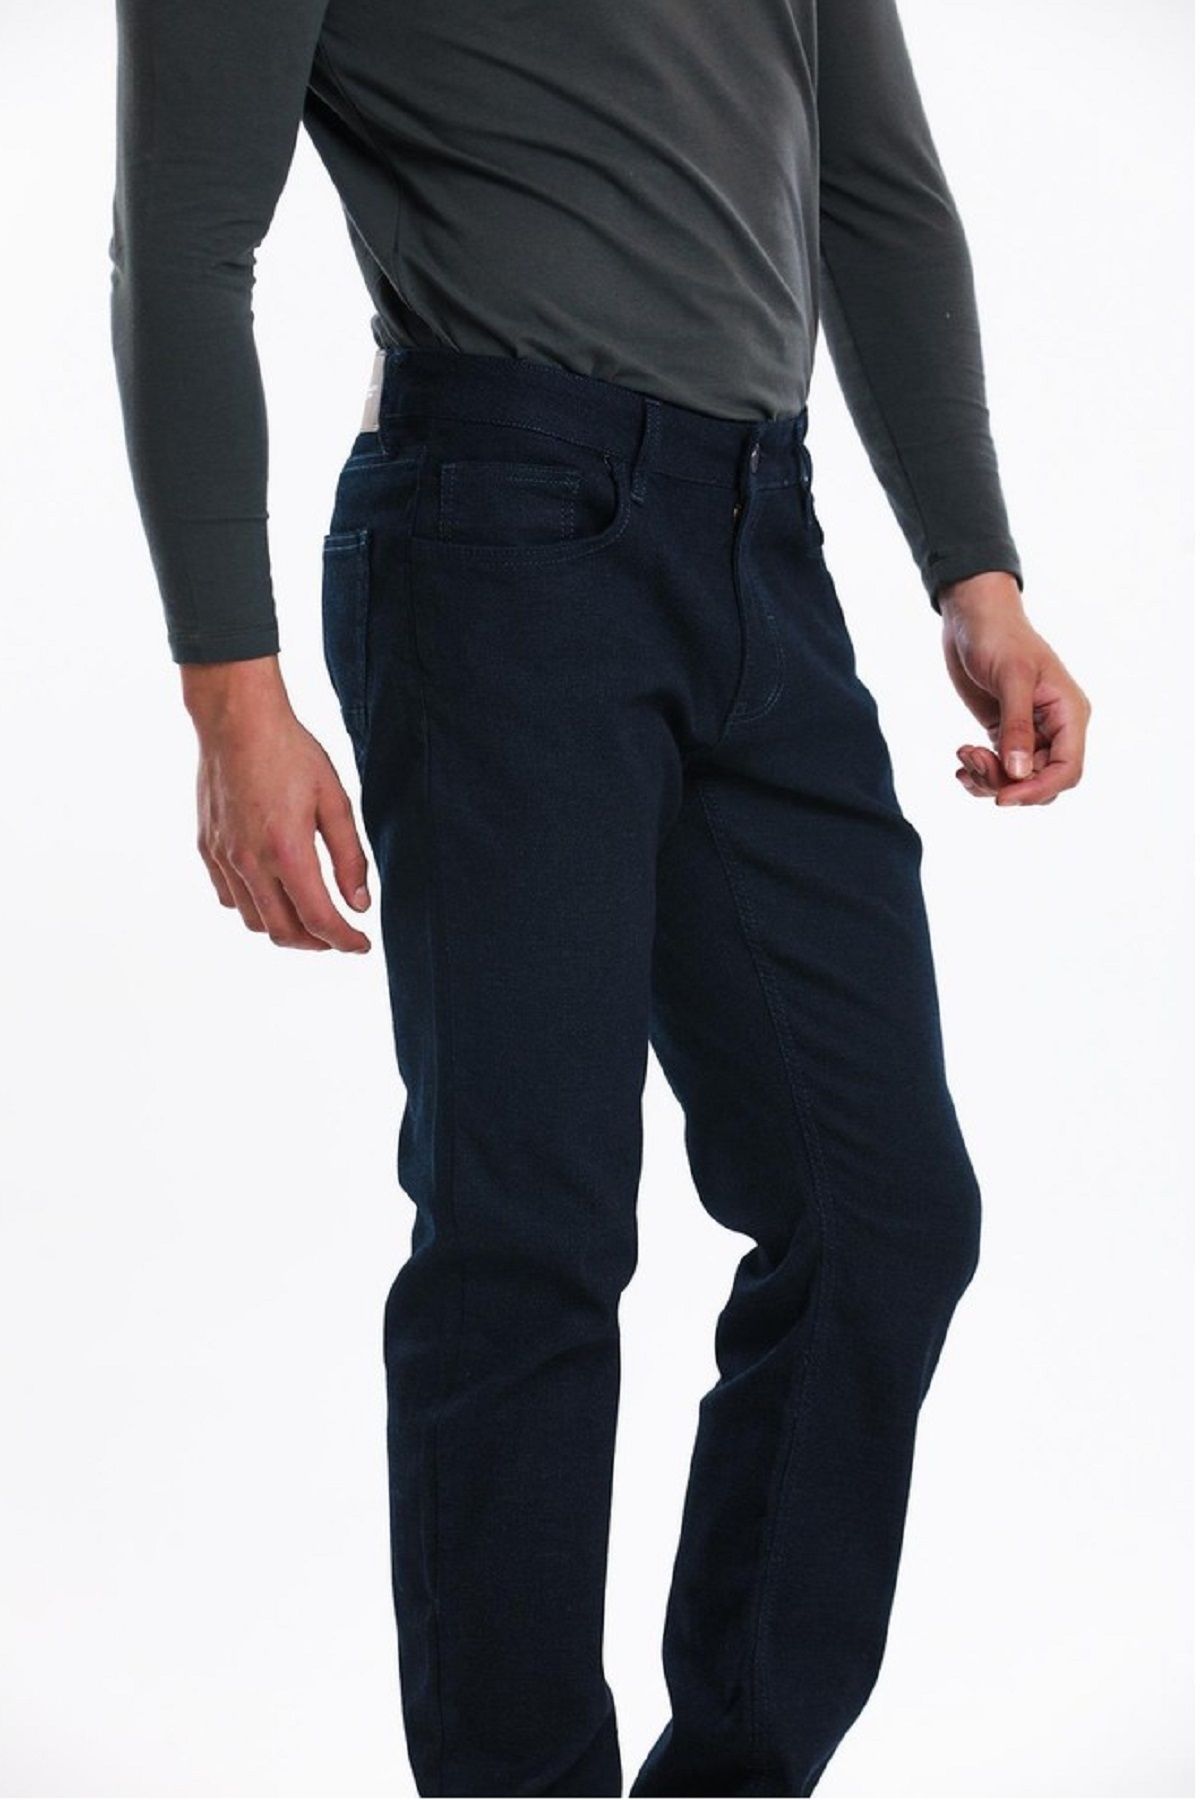 Twister Jeans ERKEK TWİSTER JEANS NORMAL BEL BÜYÜK BEDEN DOKULU PANTOLON NEW MİLANO 628-GAB K.LACİVERT